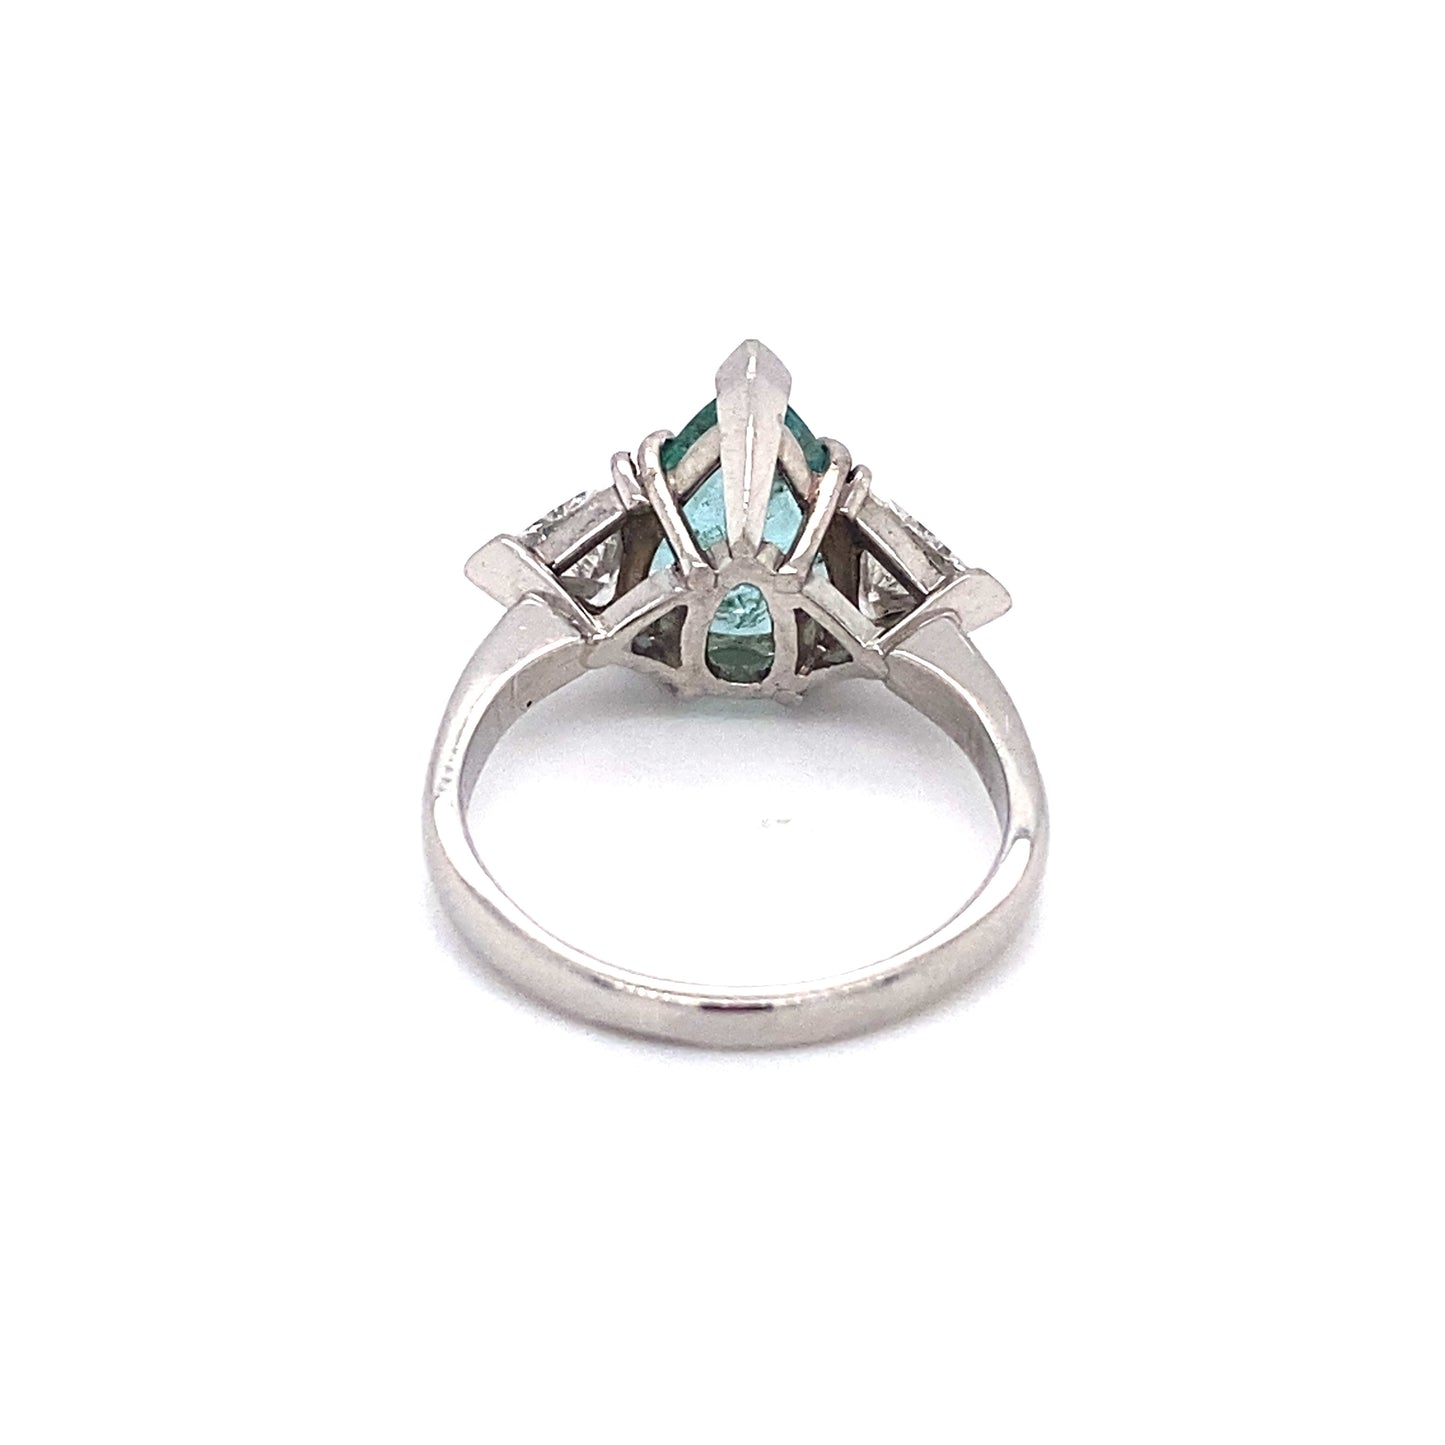 Circa 1980s 1.50 Carat Pear Cut Emerald and Diamond Three Stone Ring